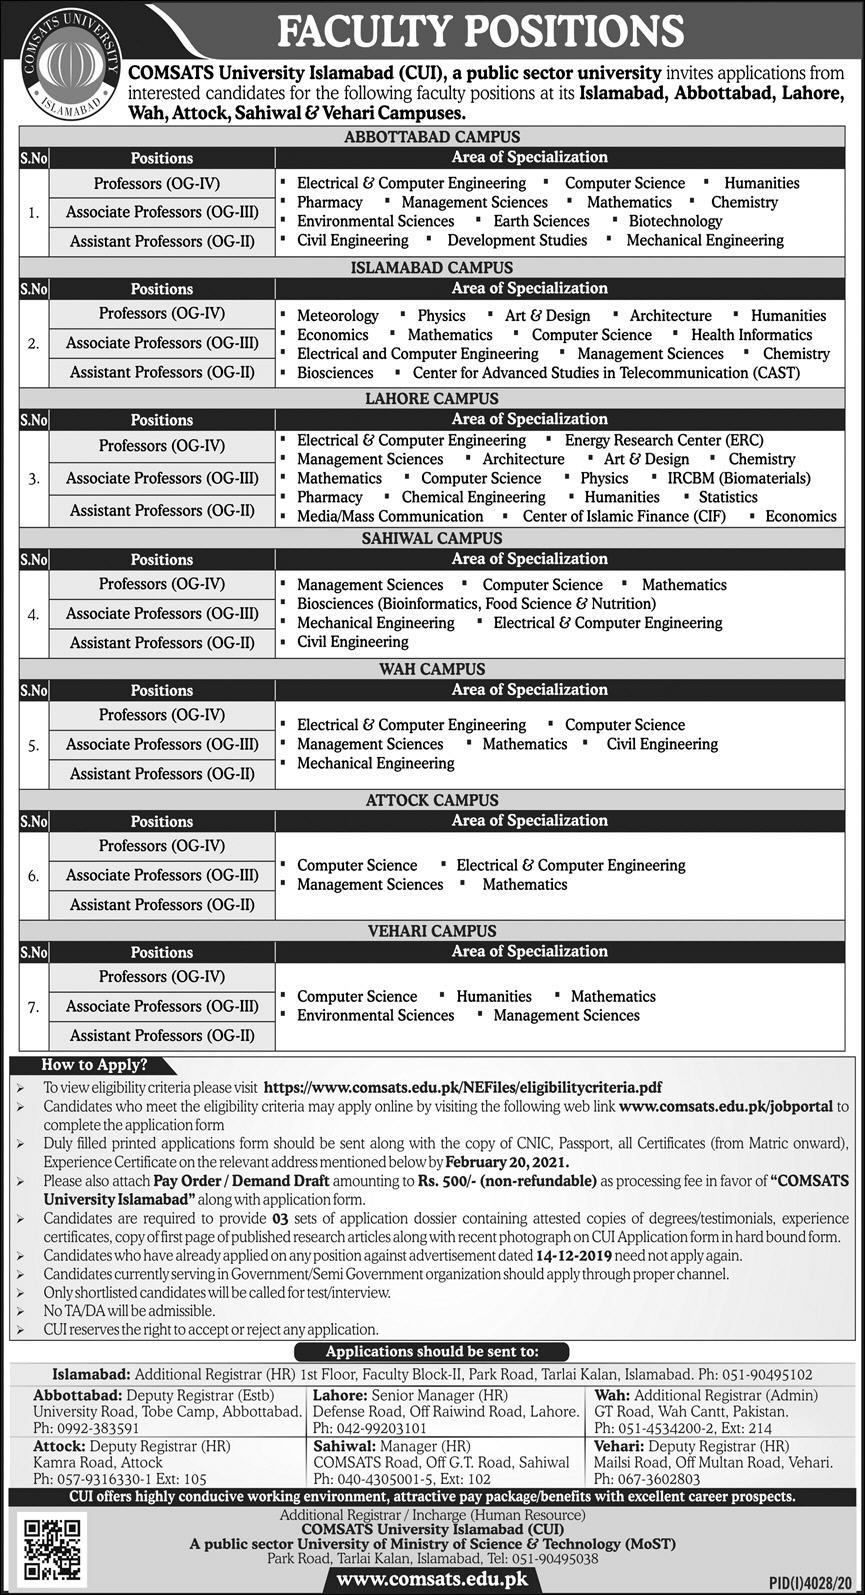 Comstats University Islamabad Jobs in Pakistan 2021